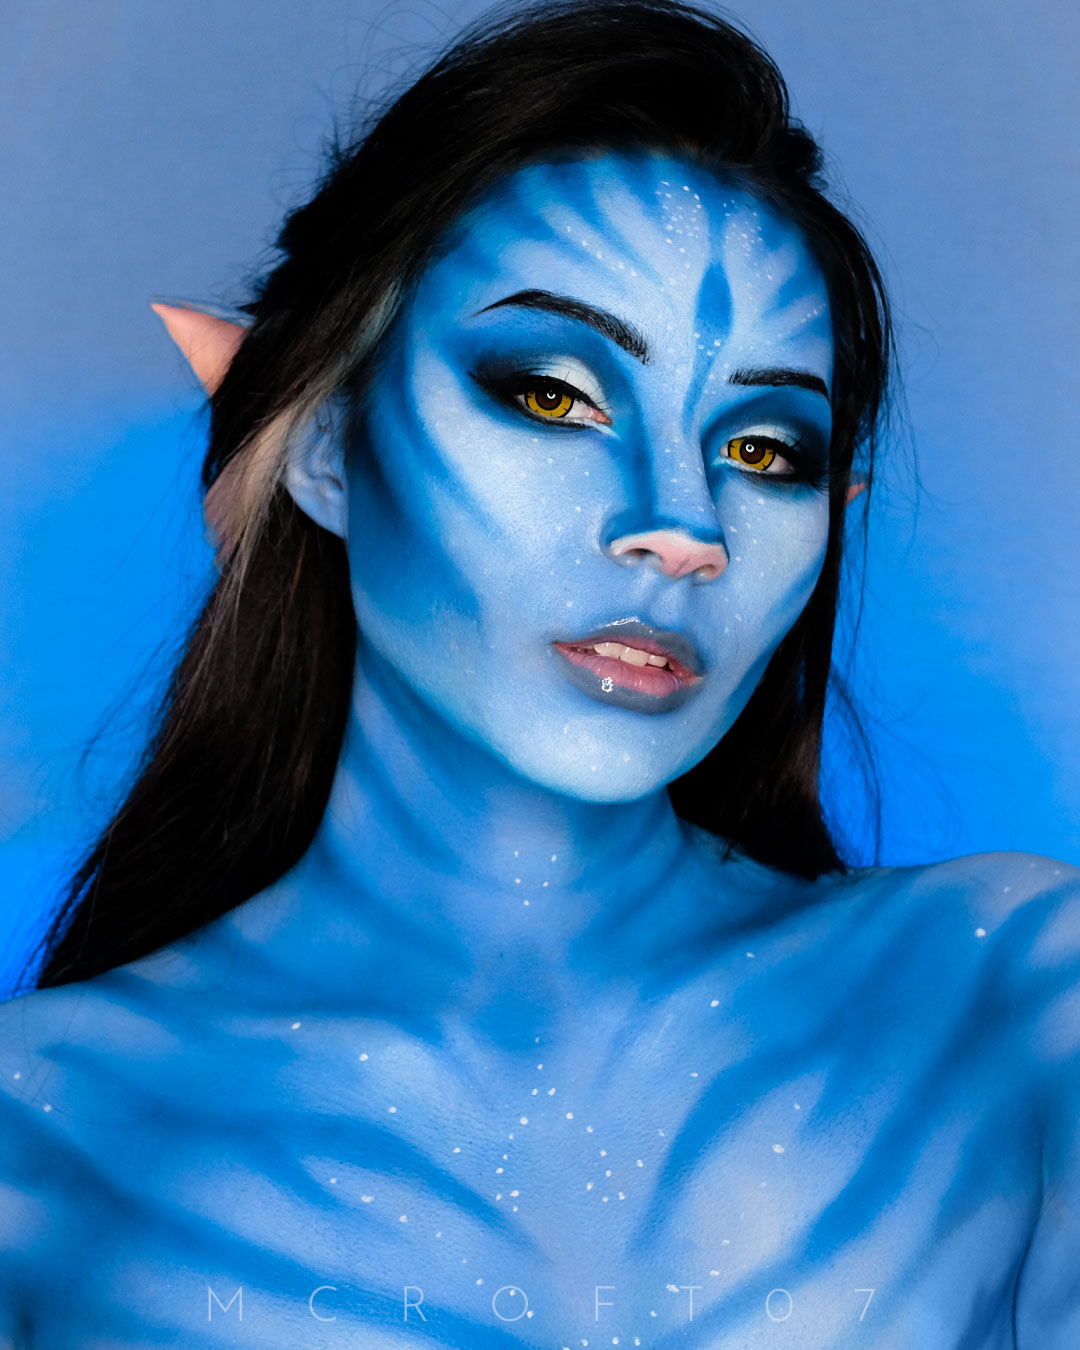 Avatar Body Paint by mcroft07 on DeviantArt